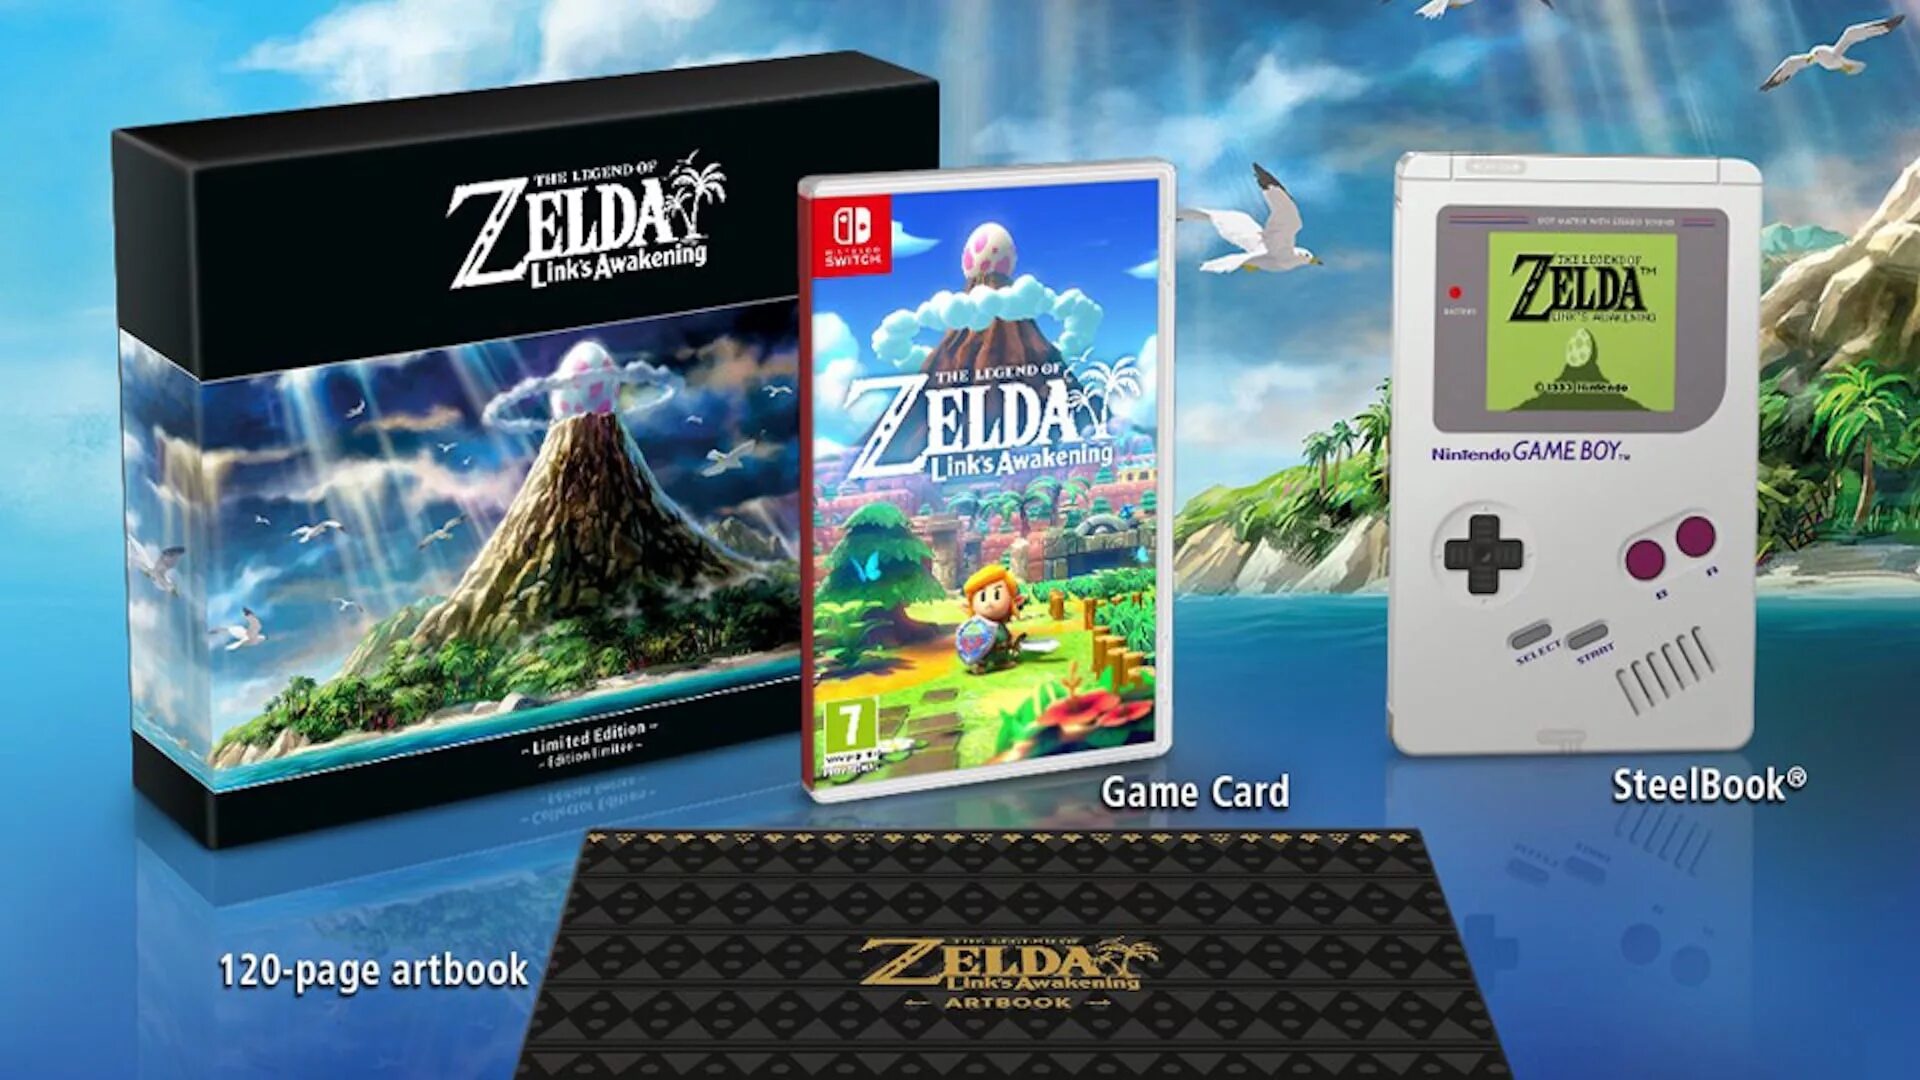 Nintendo link. Legend of Zelda: link's Awakening Limited Edition. Zelda link's Awakening Nintendo Switch. Зельда игра на Нинтендо. The Legend of Zelda коллекционное издание.